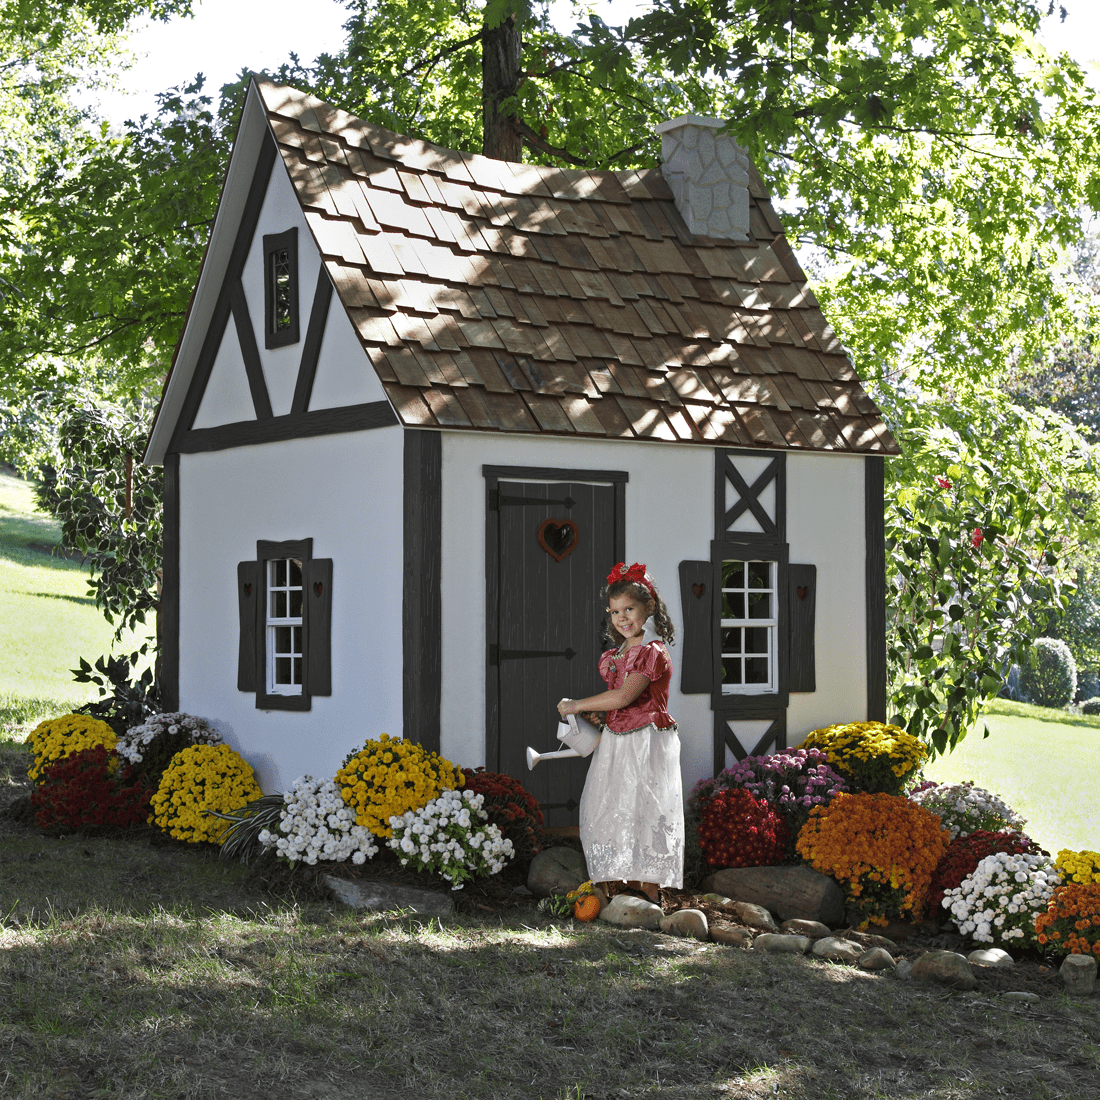 Fairytale Cottage, Lilliput Play Homes